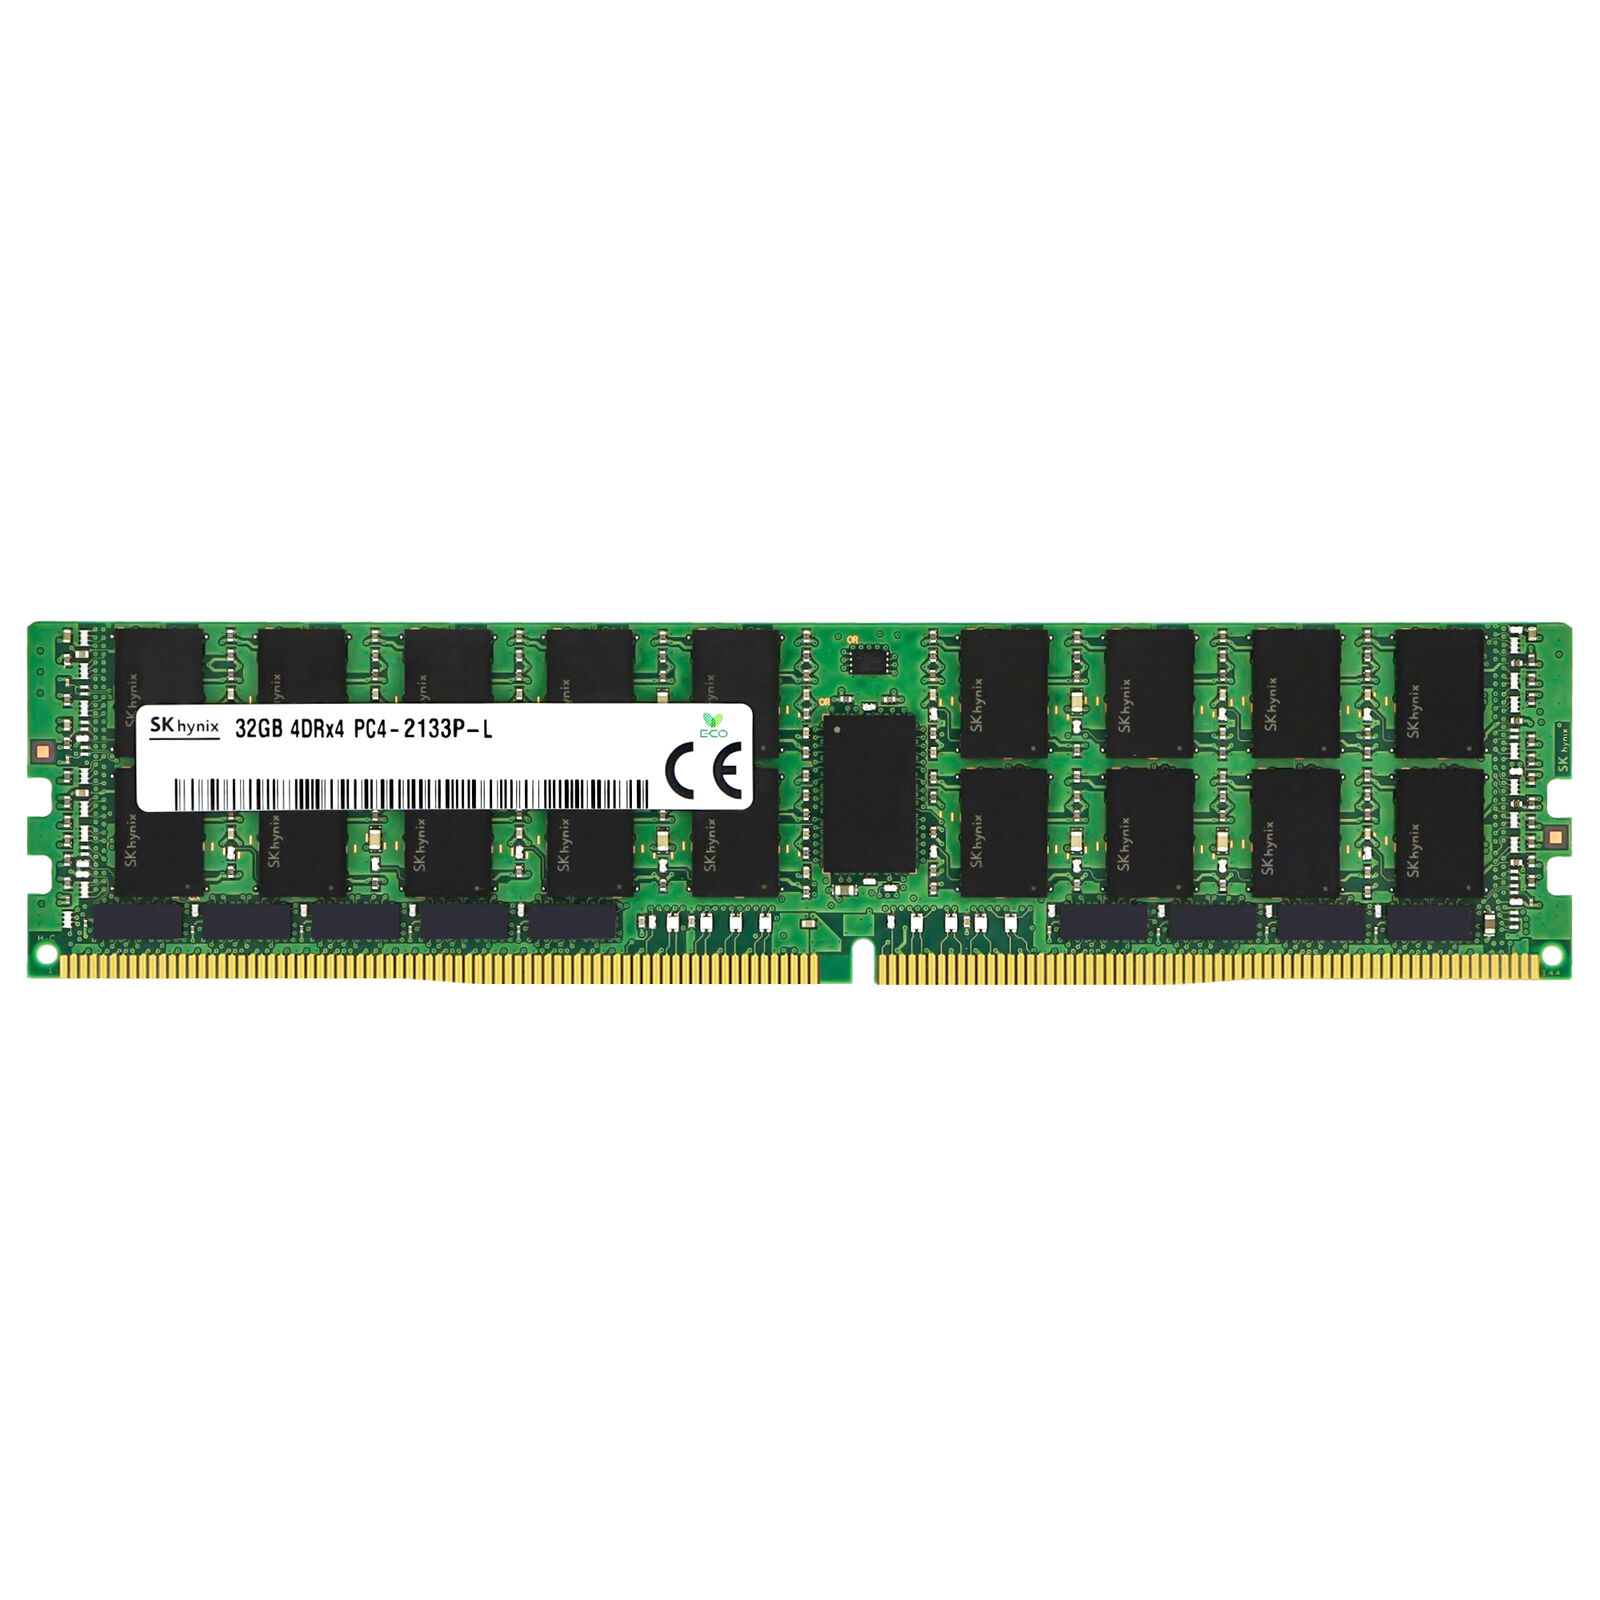 Hynix 32GB 4DRx4 PC4-2133P LRDIMM DDR4-17000 ECC Load Reduced Server Memory RAM